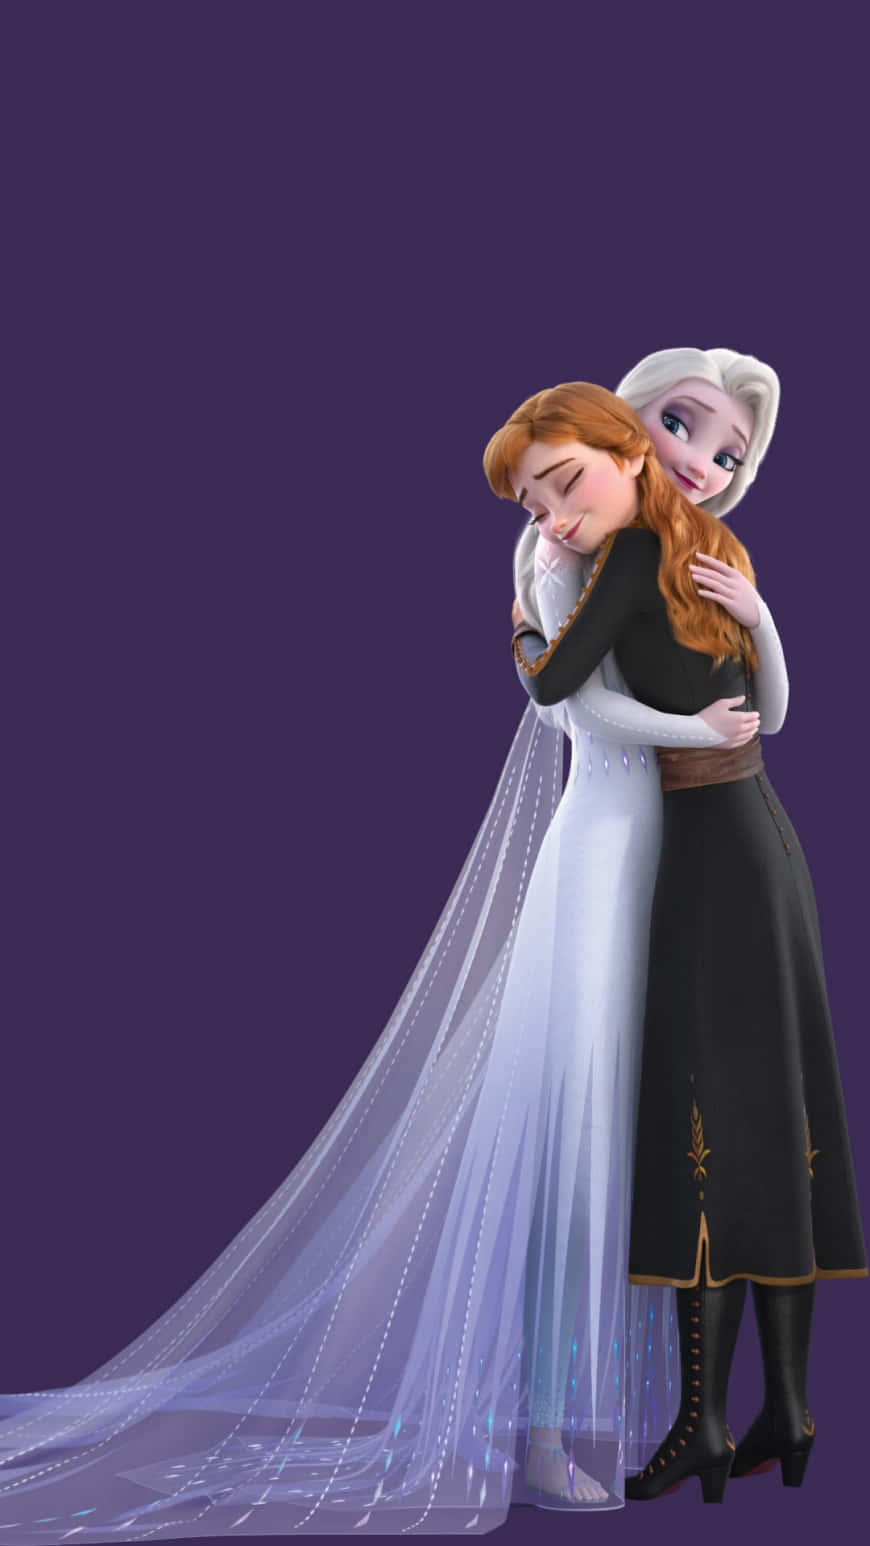 Download Elsa And Anna In A Wedding Dress Hugging Wallpaper | Wallpapers.Com